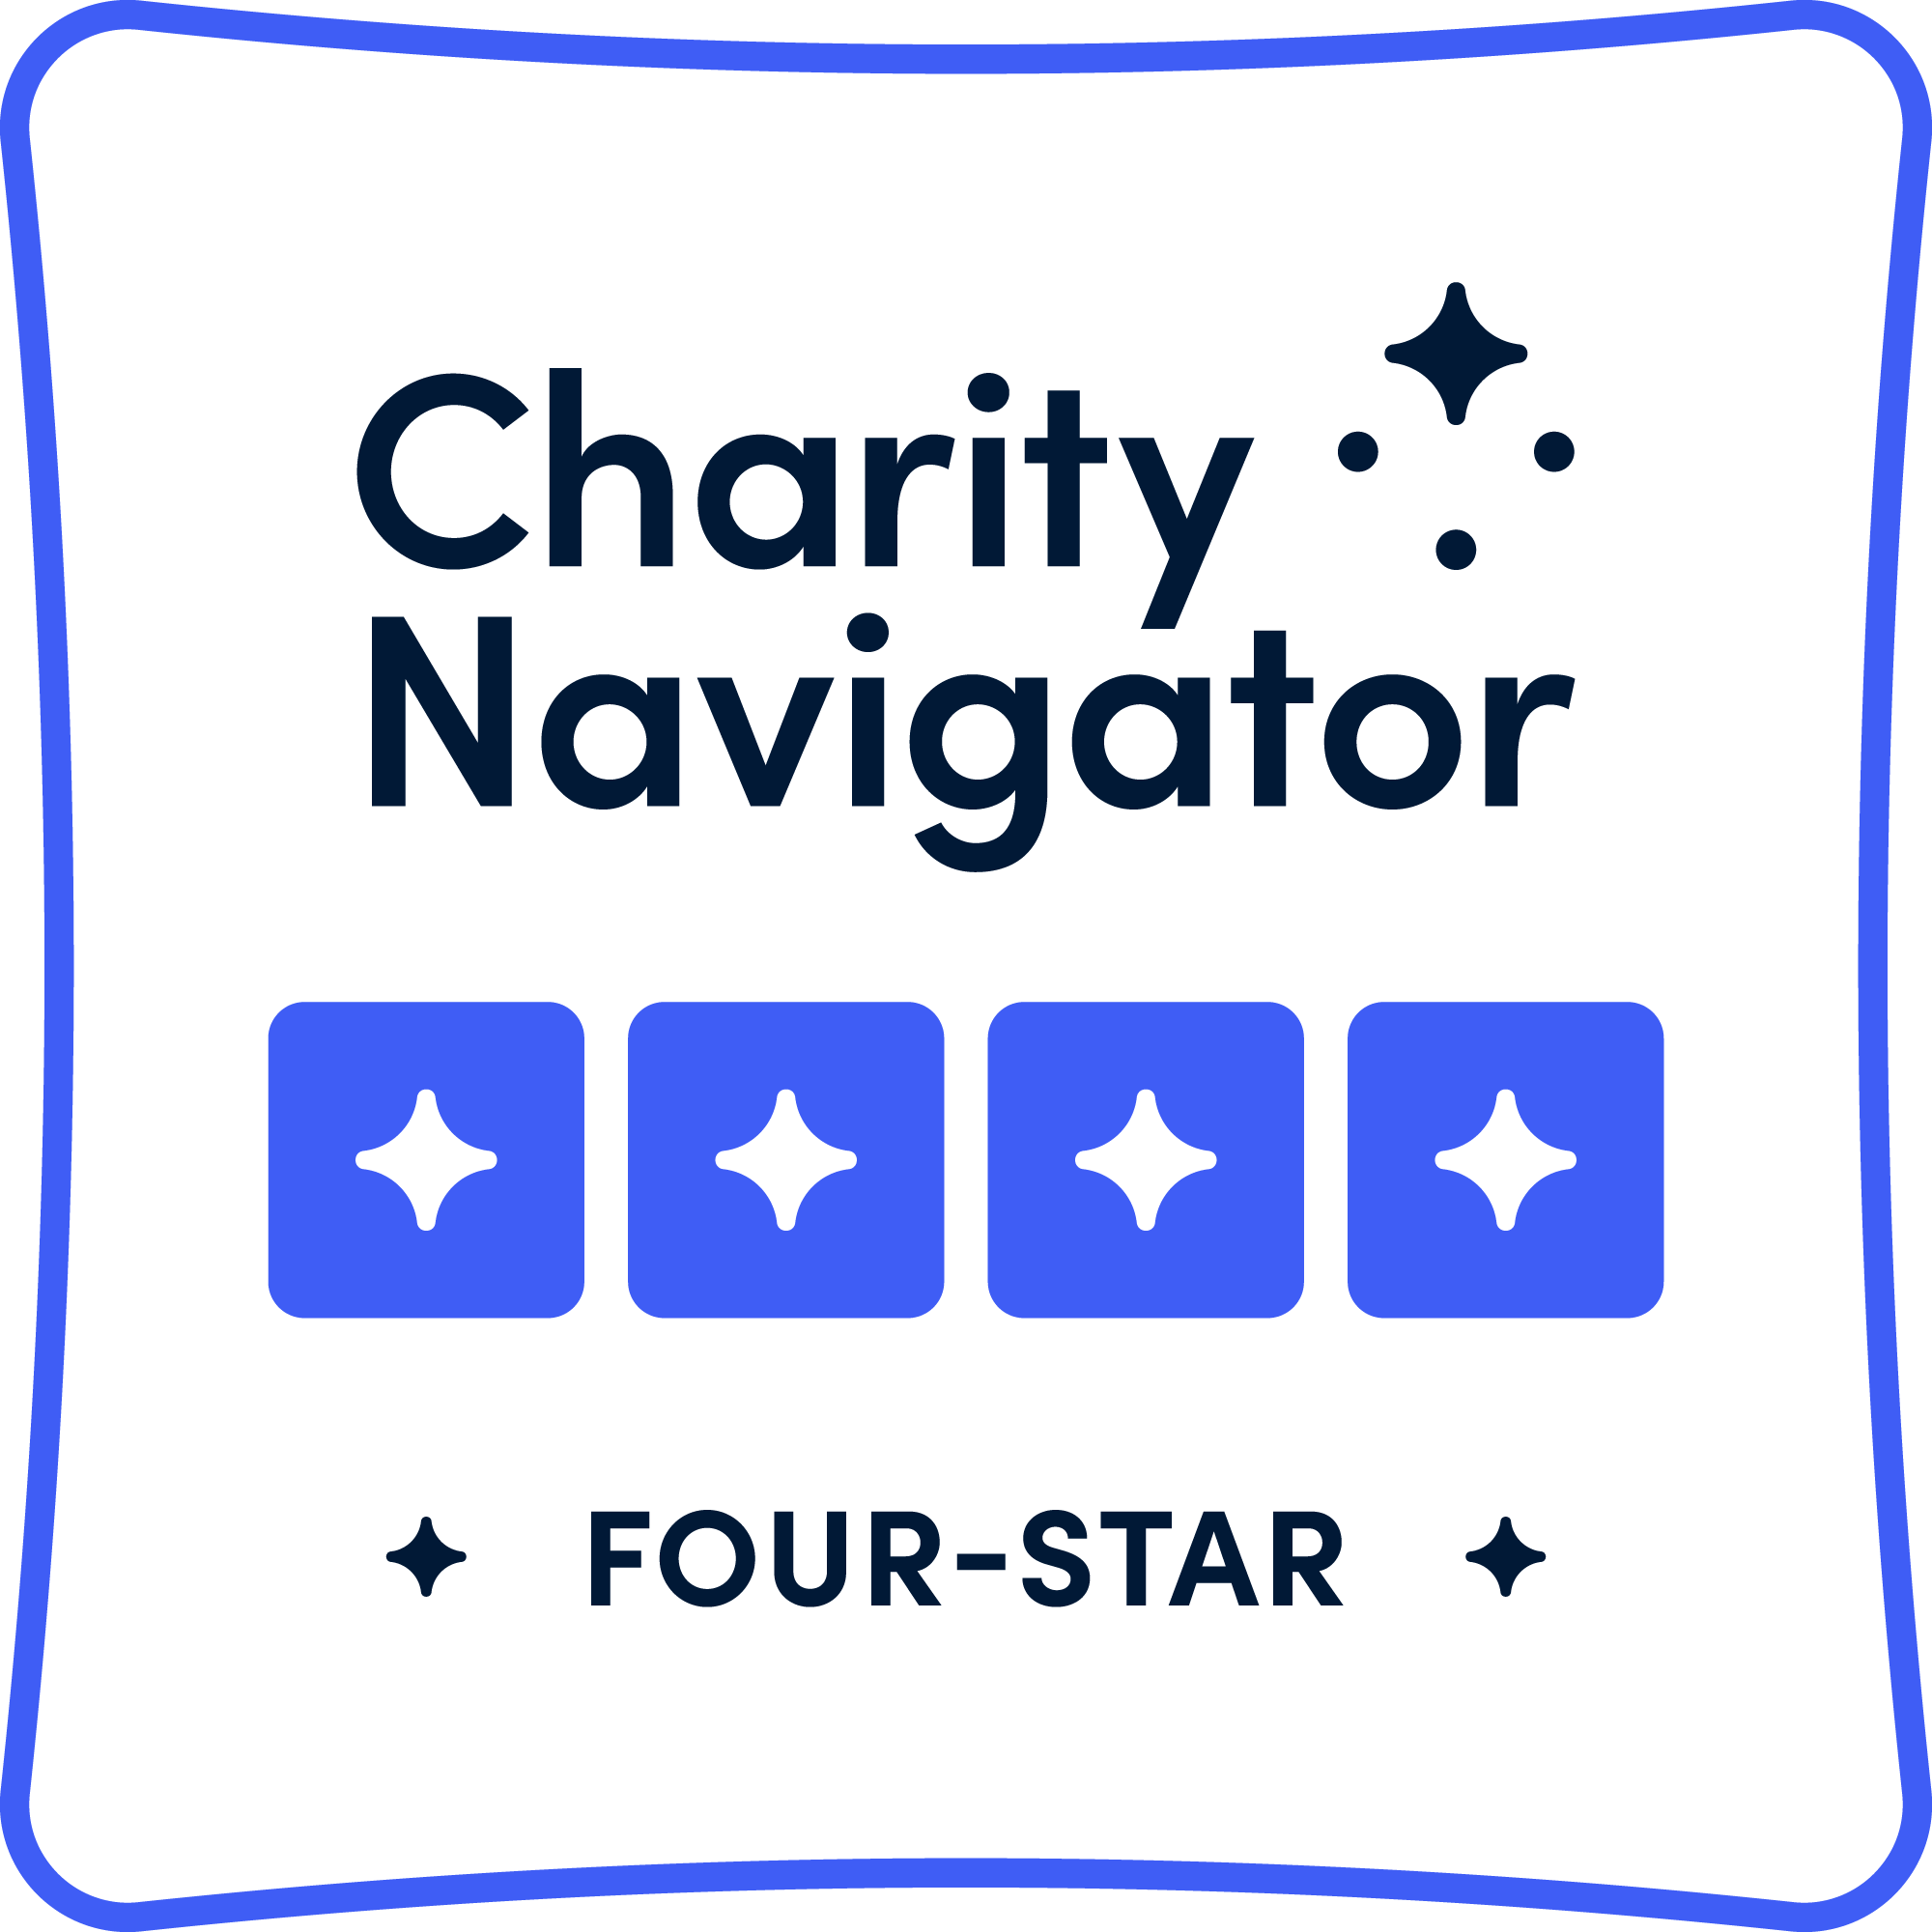 charity navigator 4-star logo